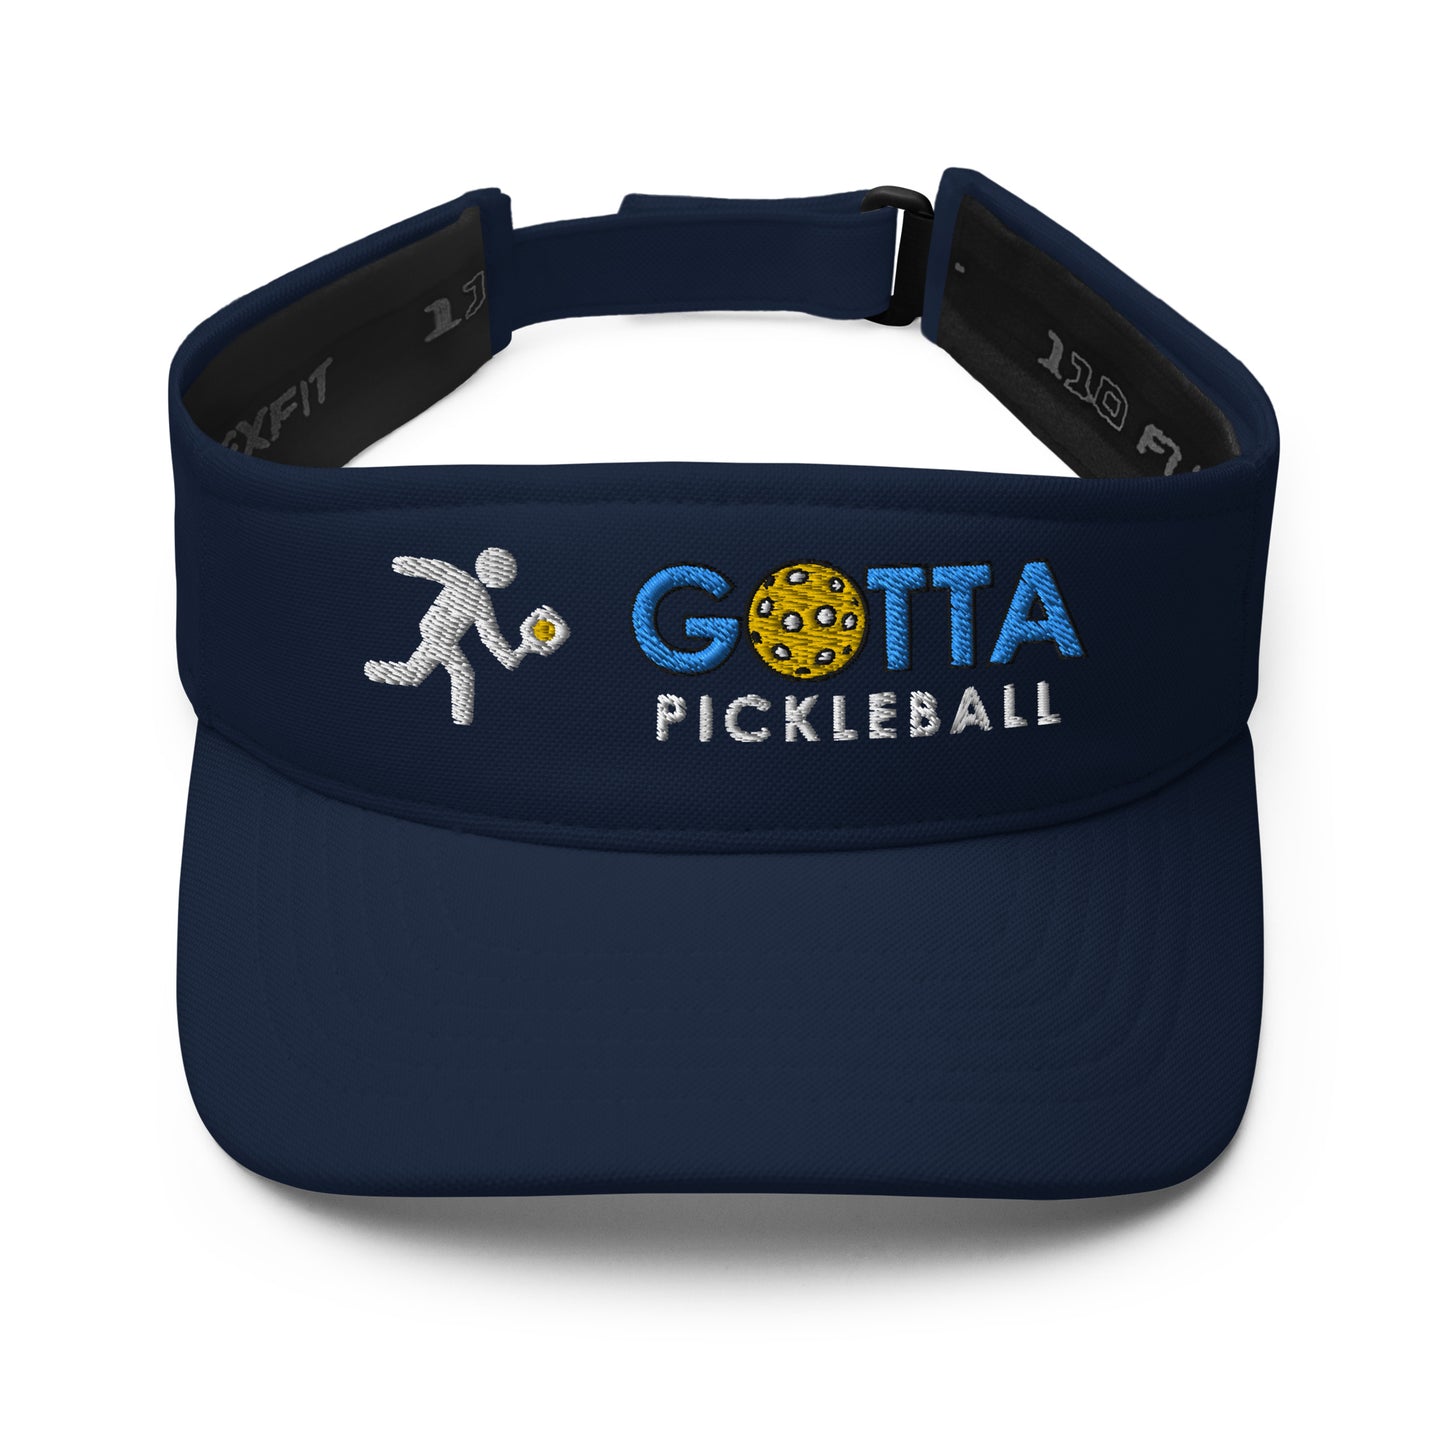 pickleball visor royal blue with embroidered pickleball player and gotta pickleball